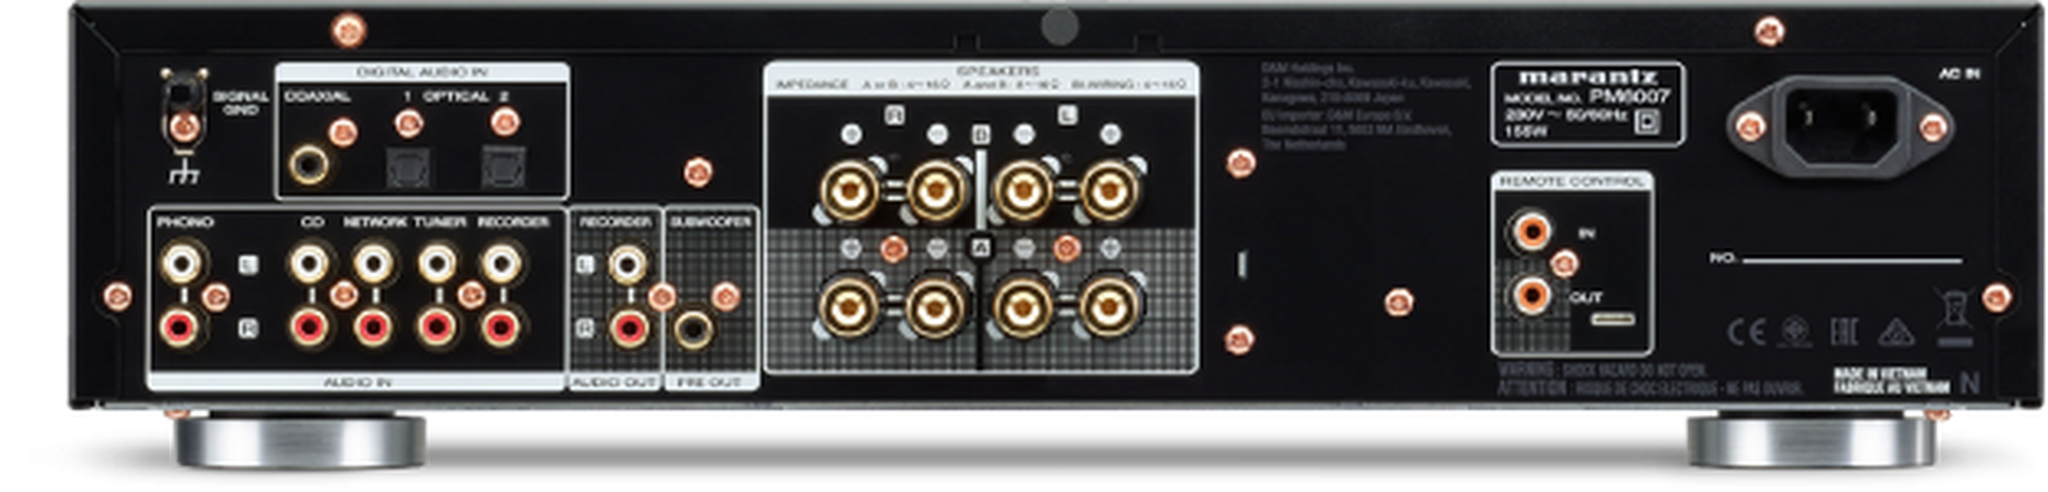 Marantz 45W Integrated Amplifier (PM6007)